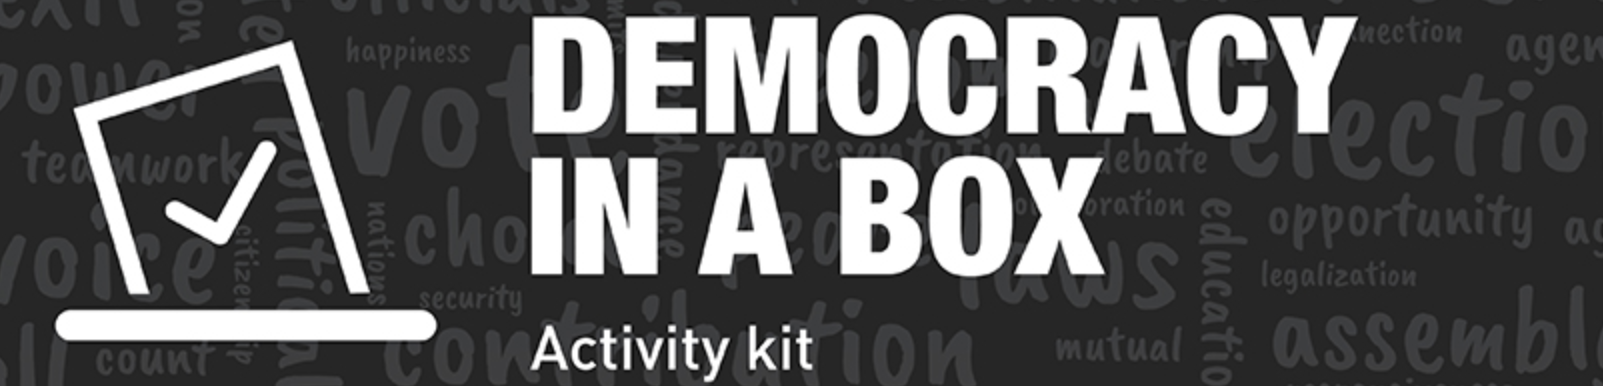 Democracy in a Box Activity kit